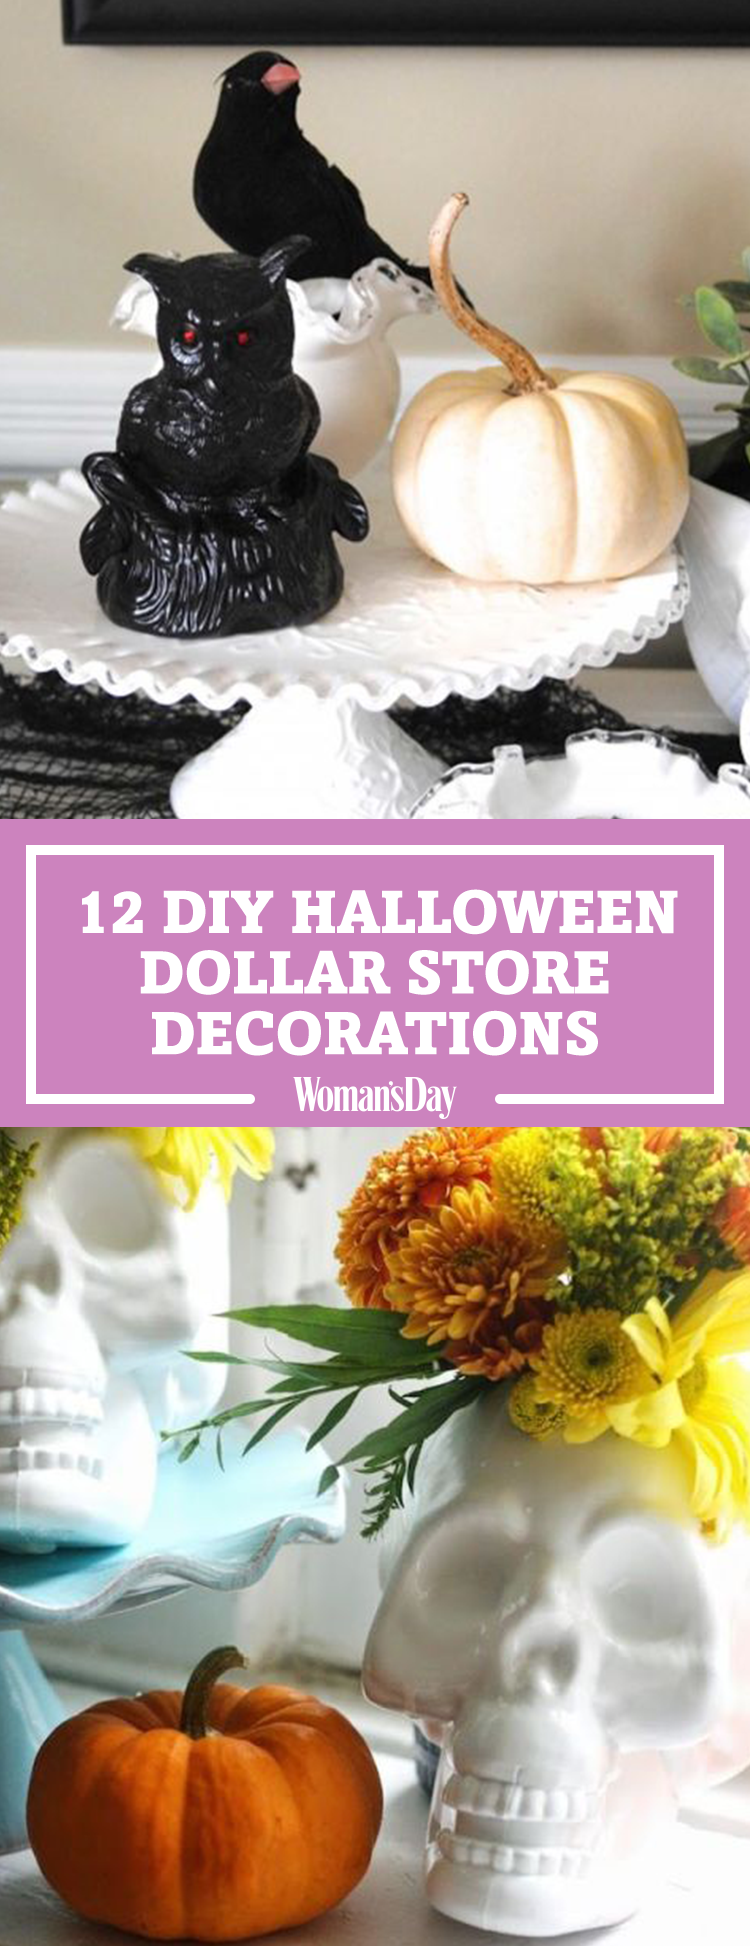 12 Easy Dollar Store Halloween Decorations - Dollar Store Halloween